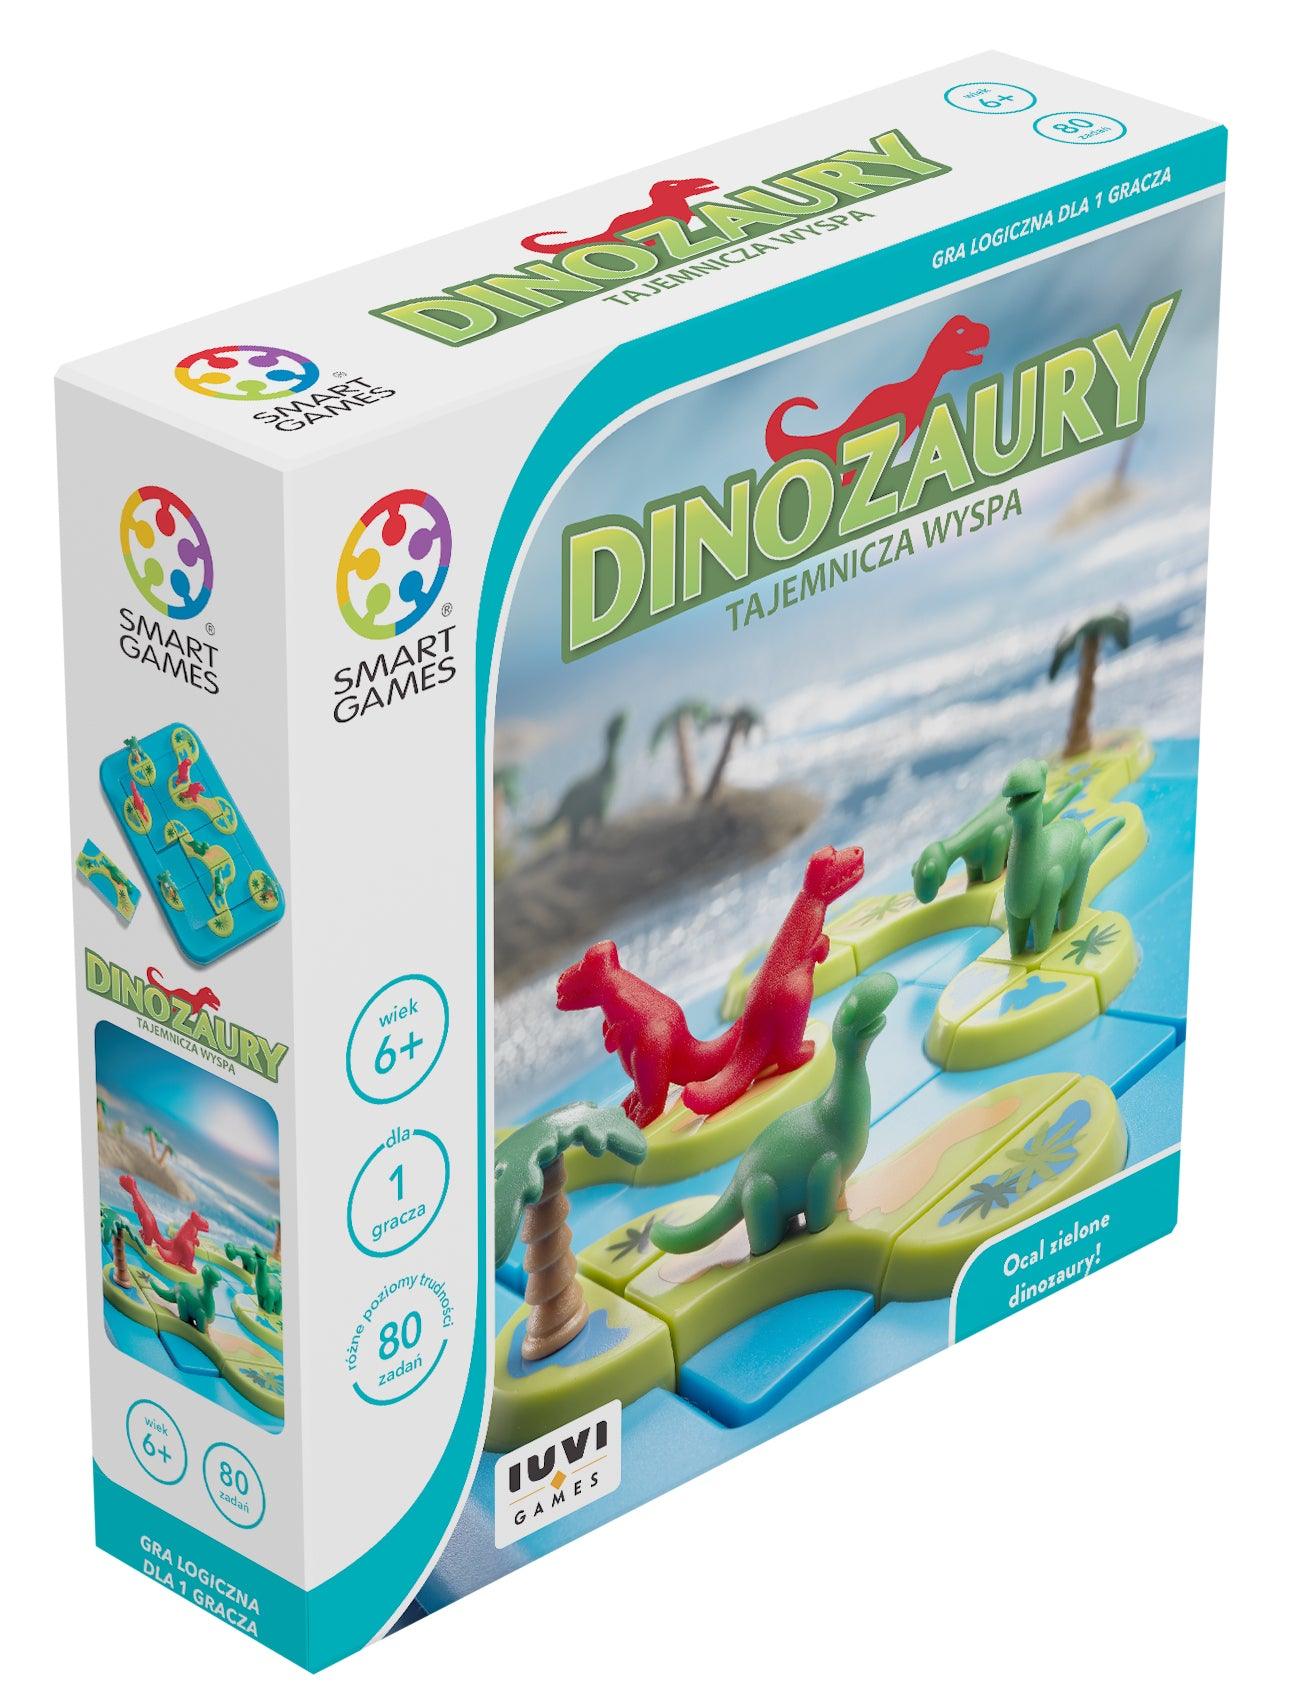 IUVI Games: gra logiczna Dinozaury Tajemnicza Wyspa Kod Smart Games - Noski Noski